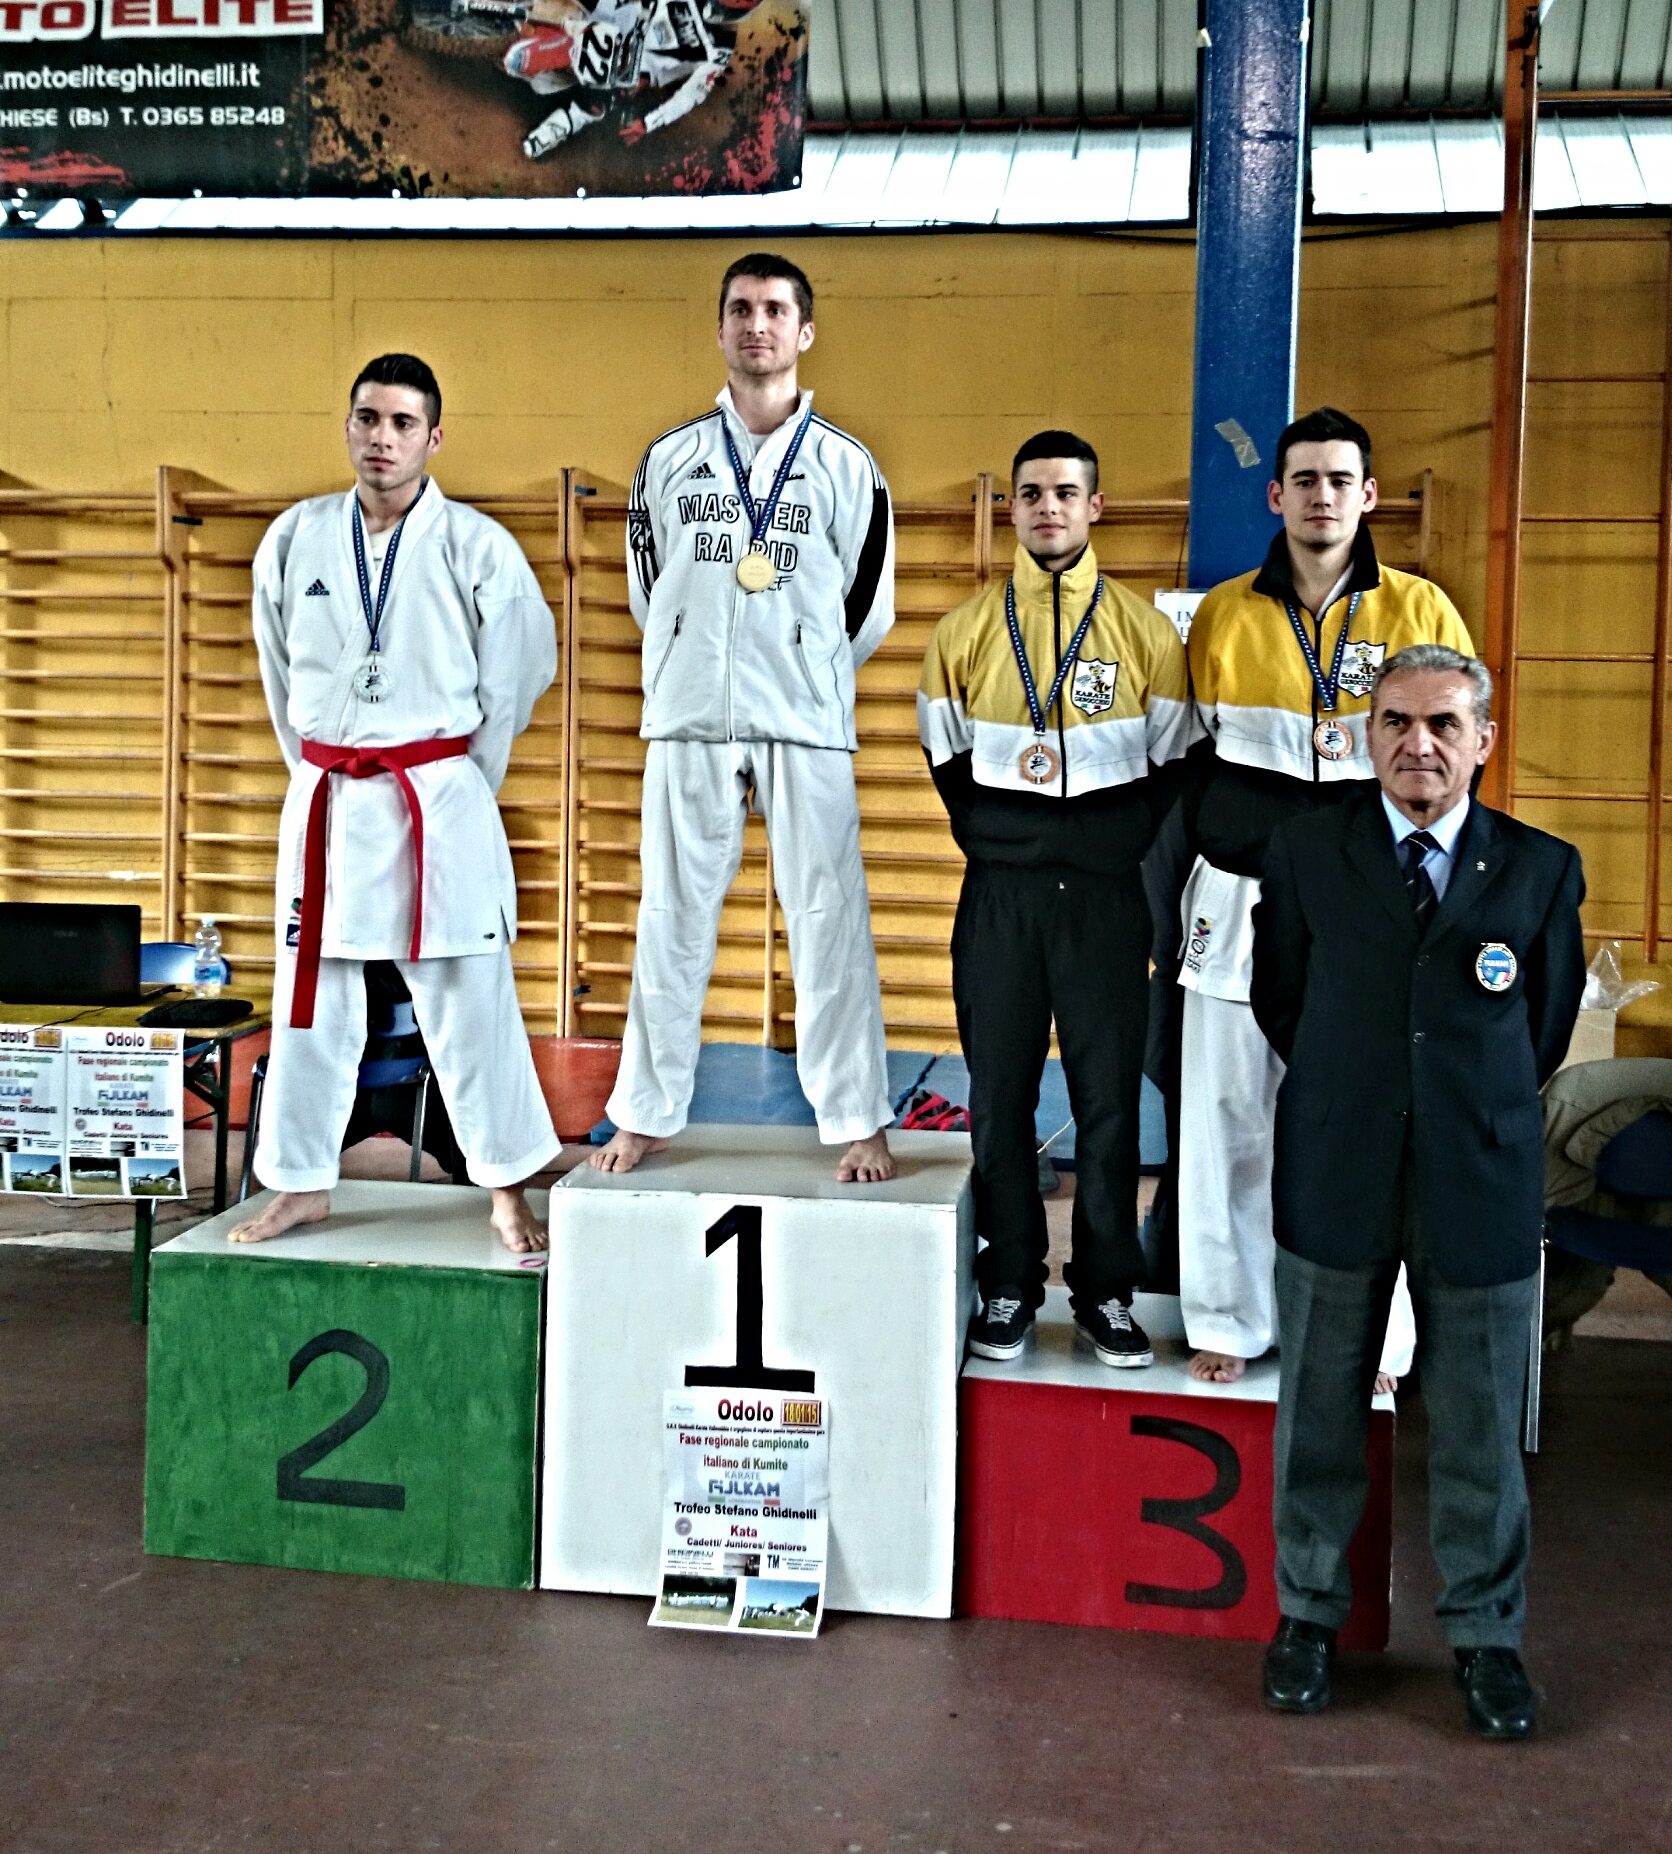 Campionato Regione Assoluti 2015 Kumite. Oscar Pe Campione Regionale e Ivan Bottò Medaglia di Bronzo.